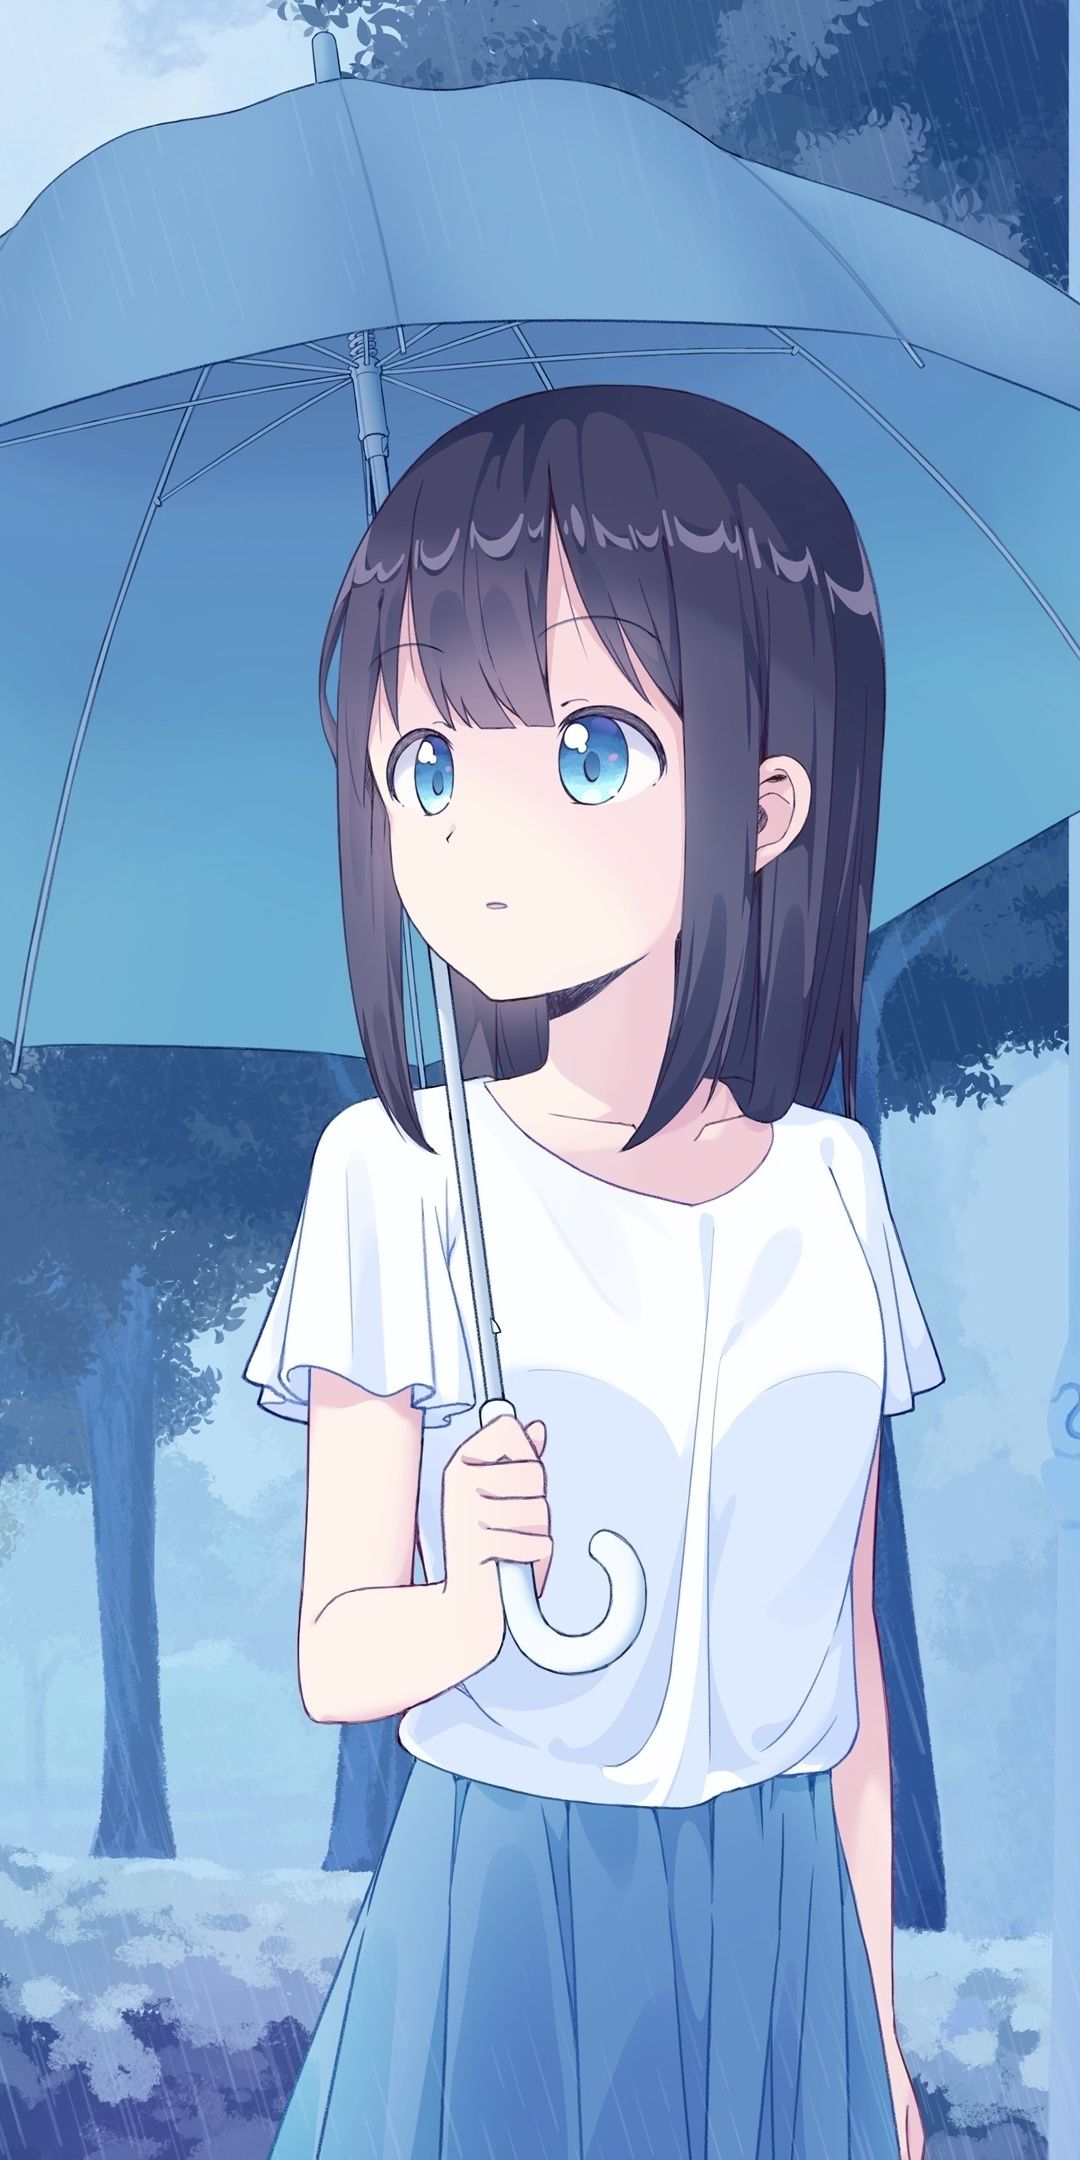 Anime girl cute with umbrella art 1080x2160 wallpaper Anime